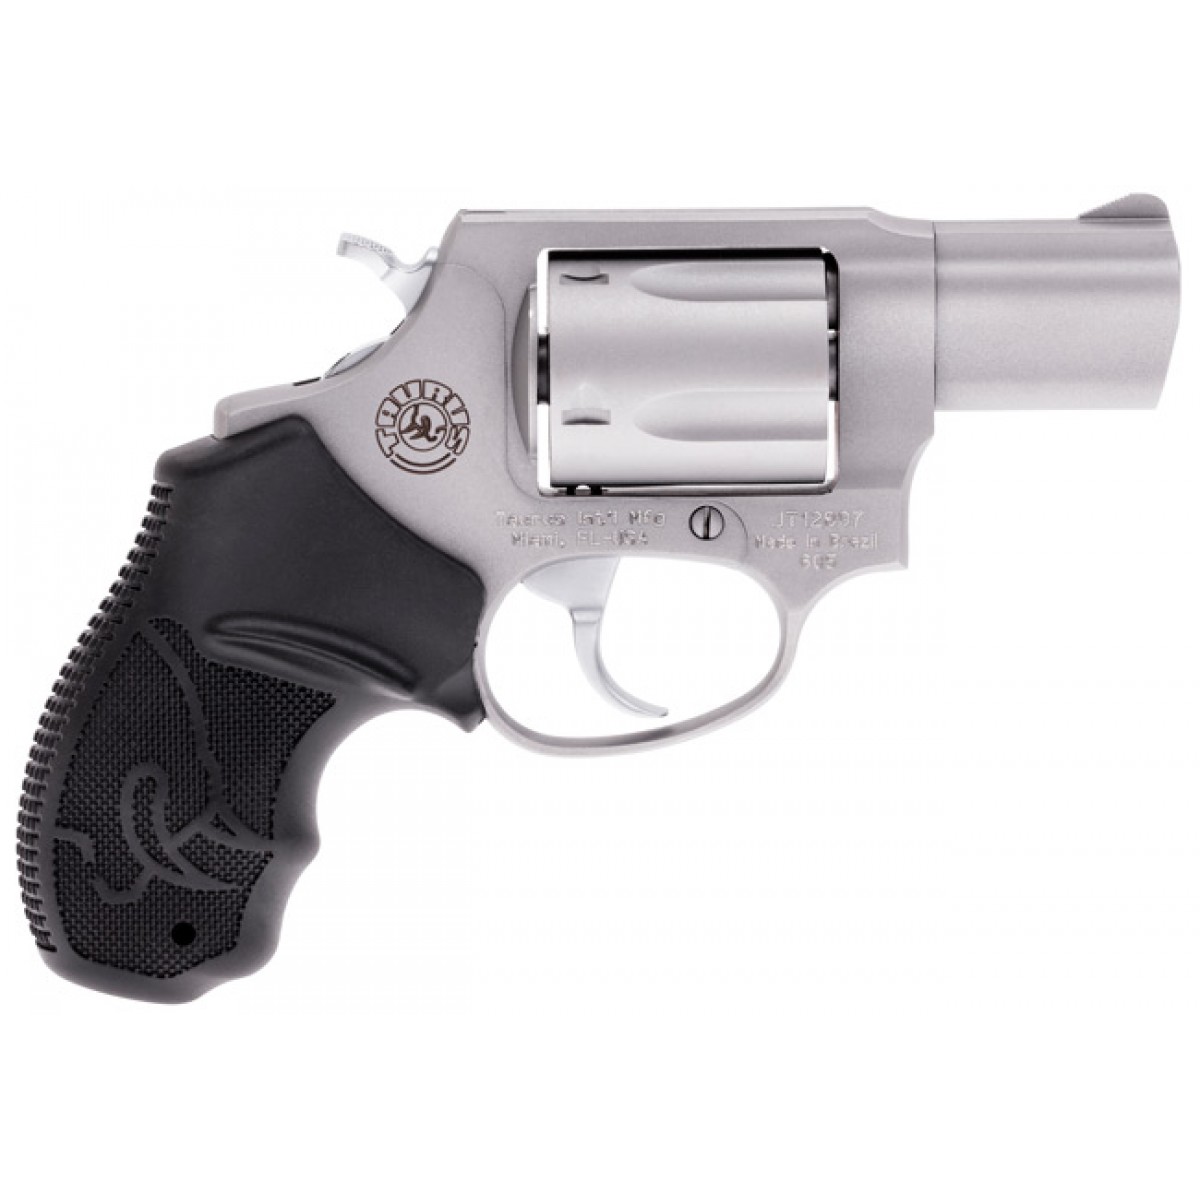 Taurus pistol recall: Firearms company voluntary recalls 